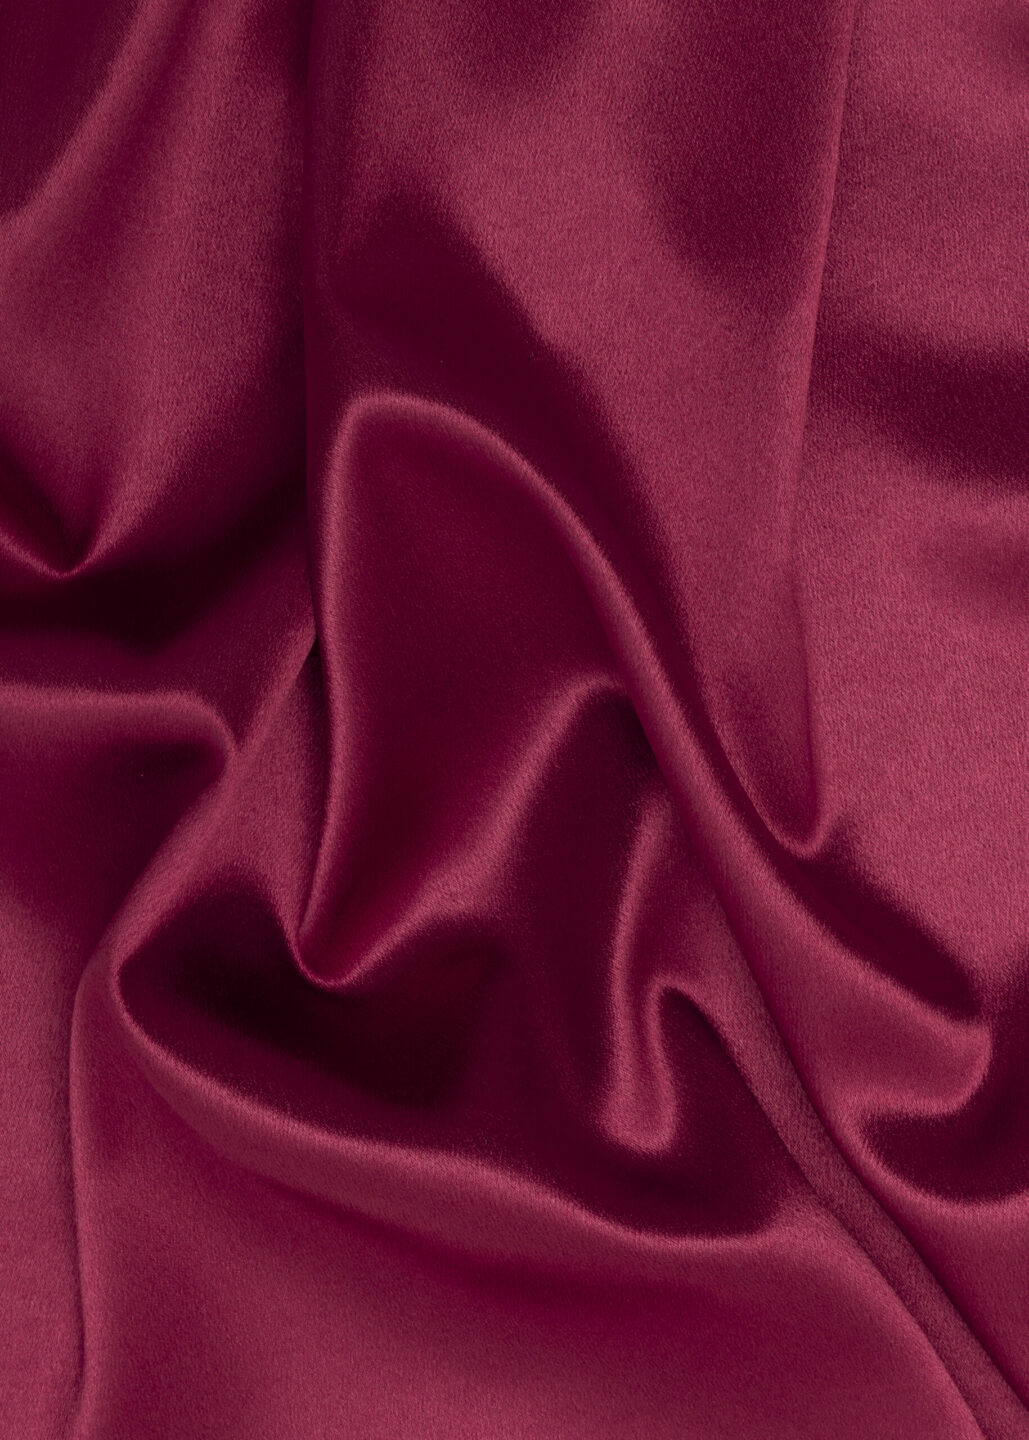 Red Satin - Our fabrics - That Original